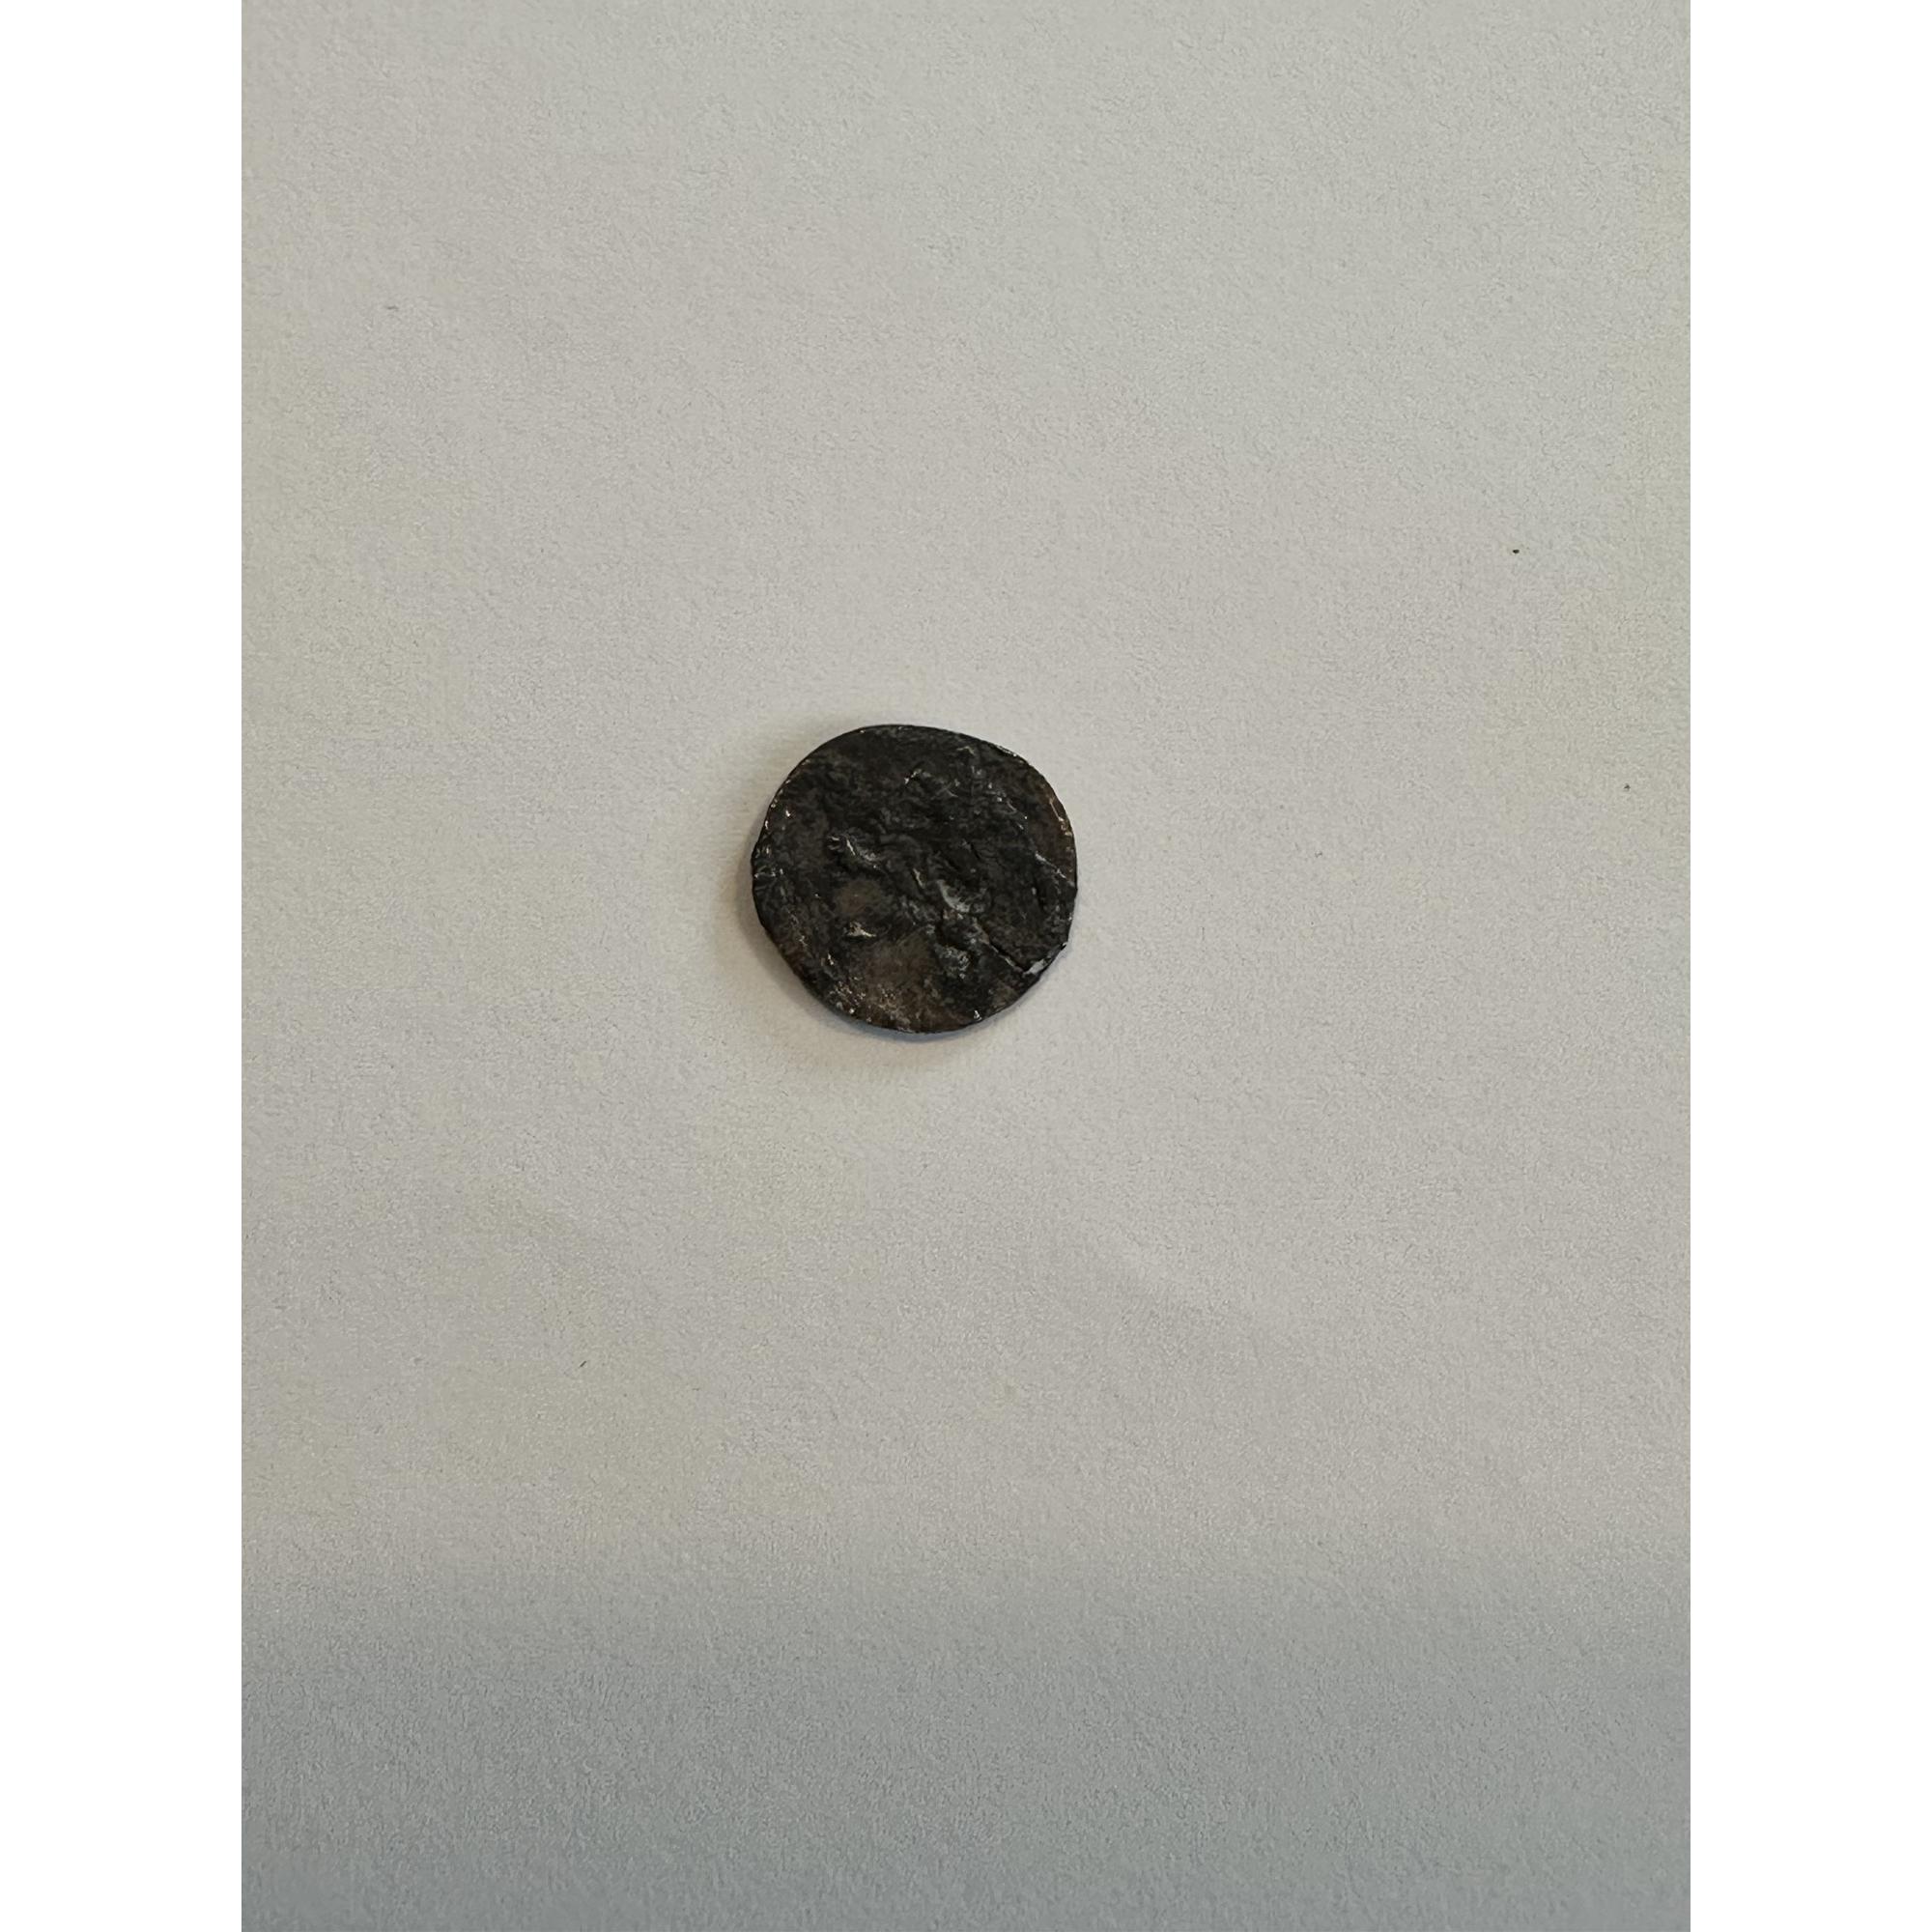 Shipwreck Silver coin, 1/4 Reale Cob, 1600s Prehistoric Online